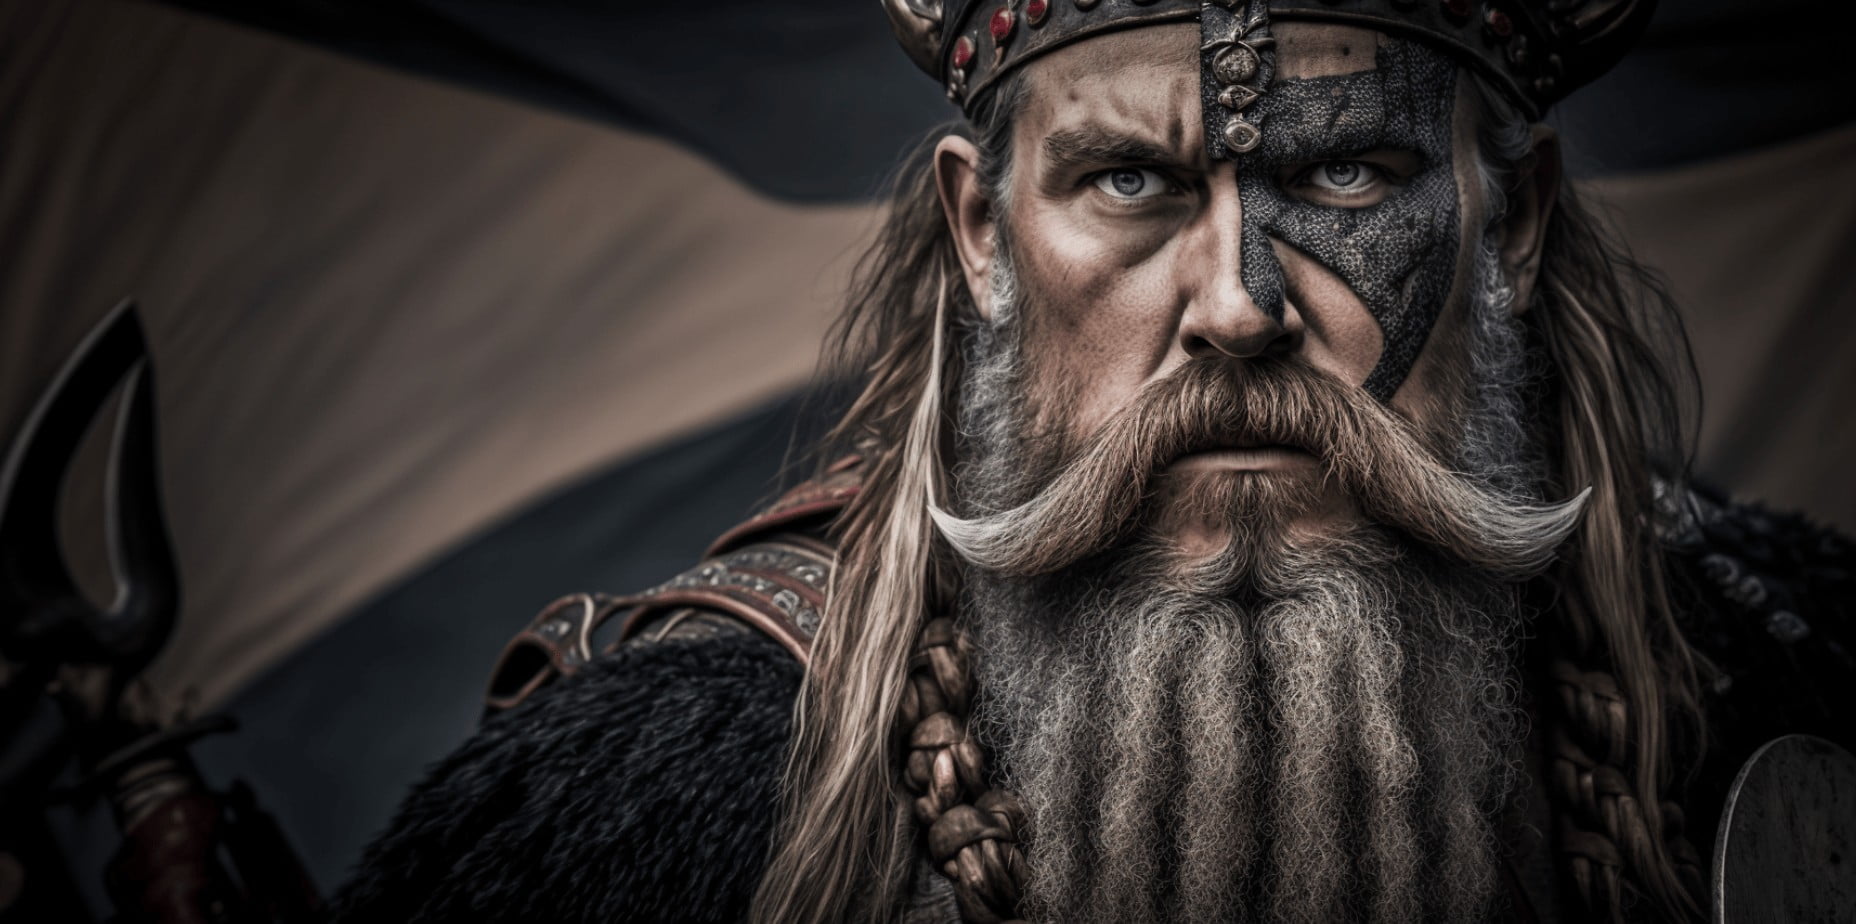 viking face paint